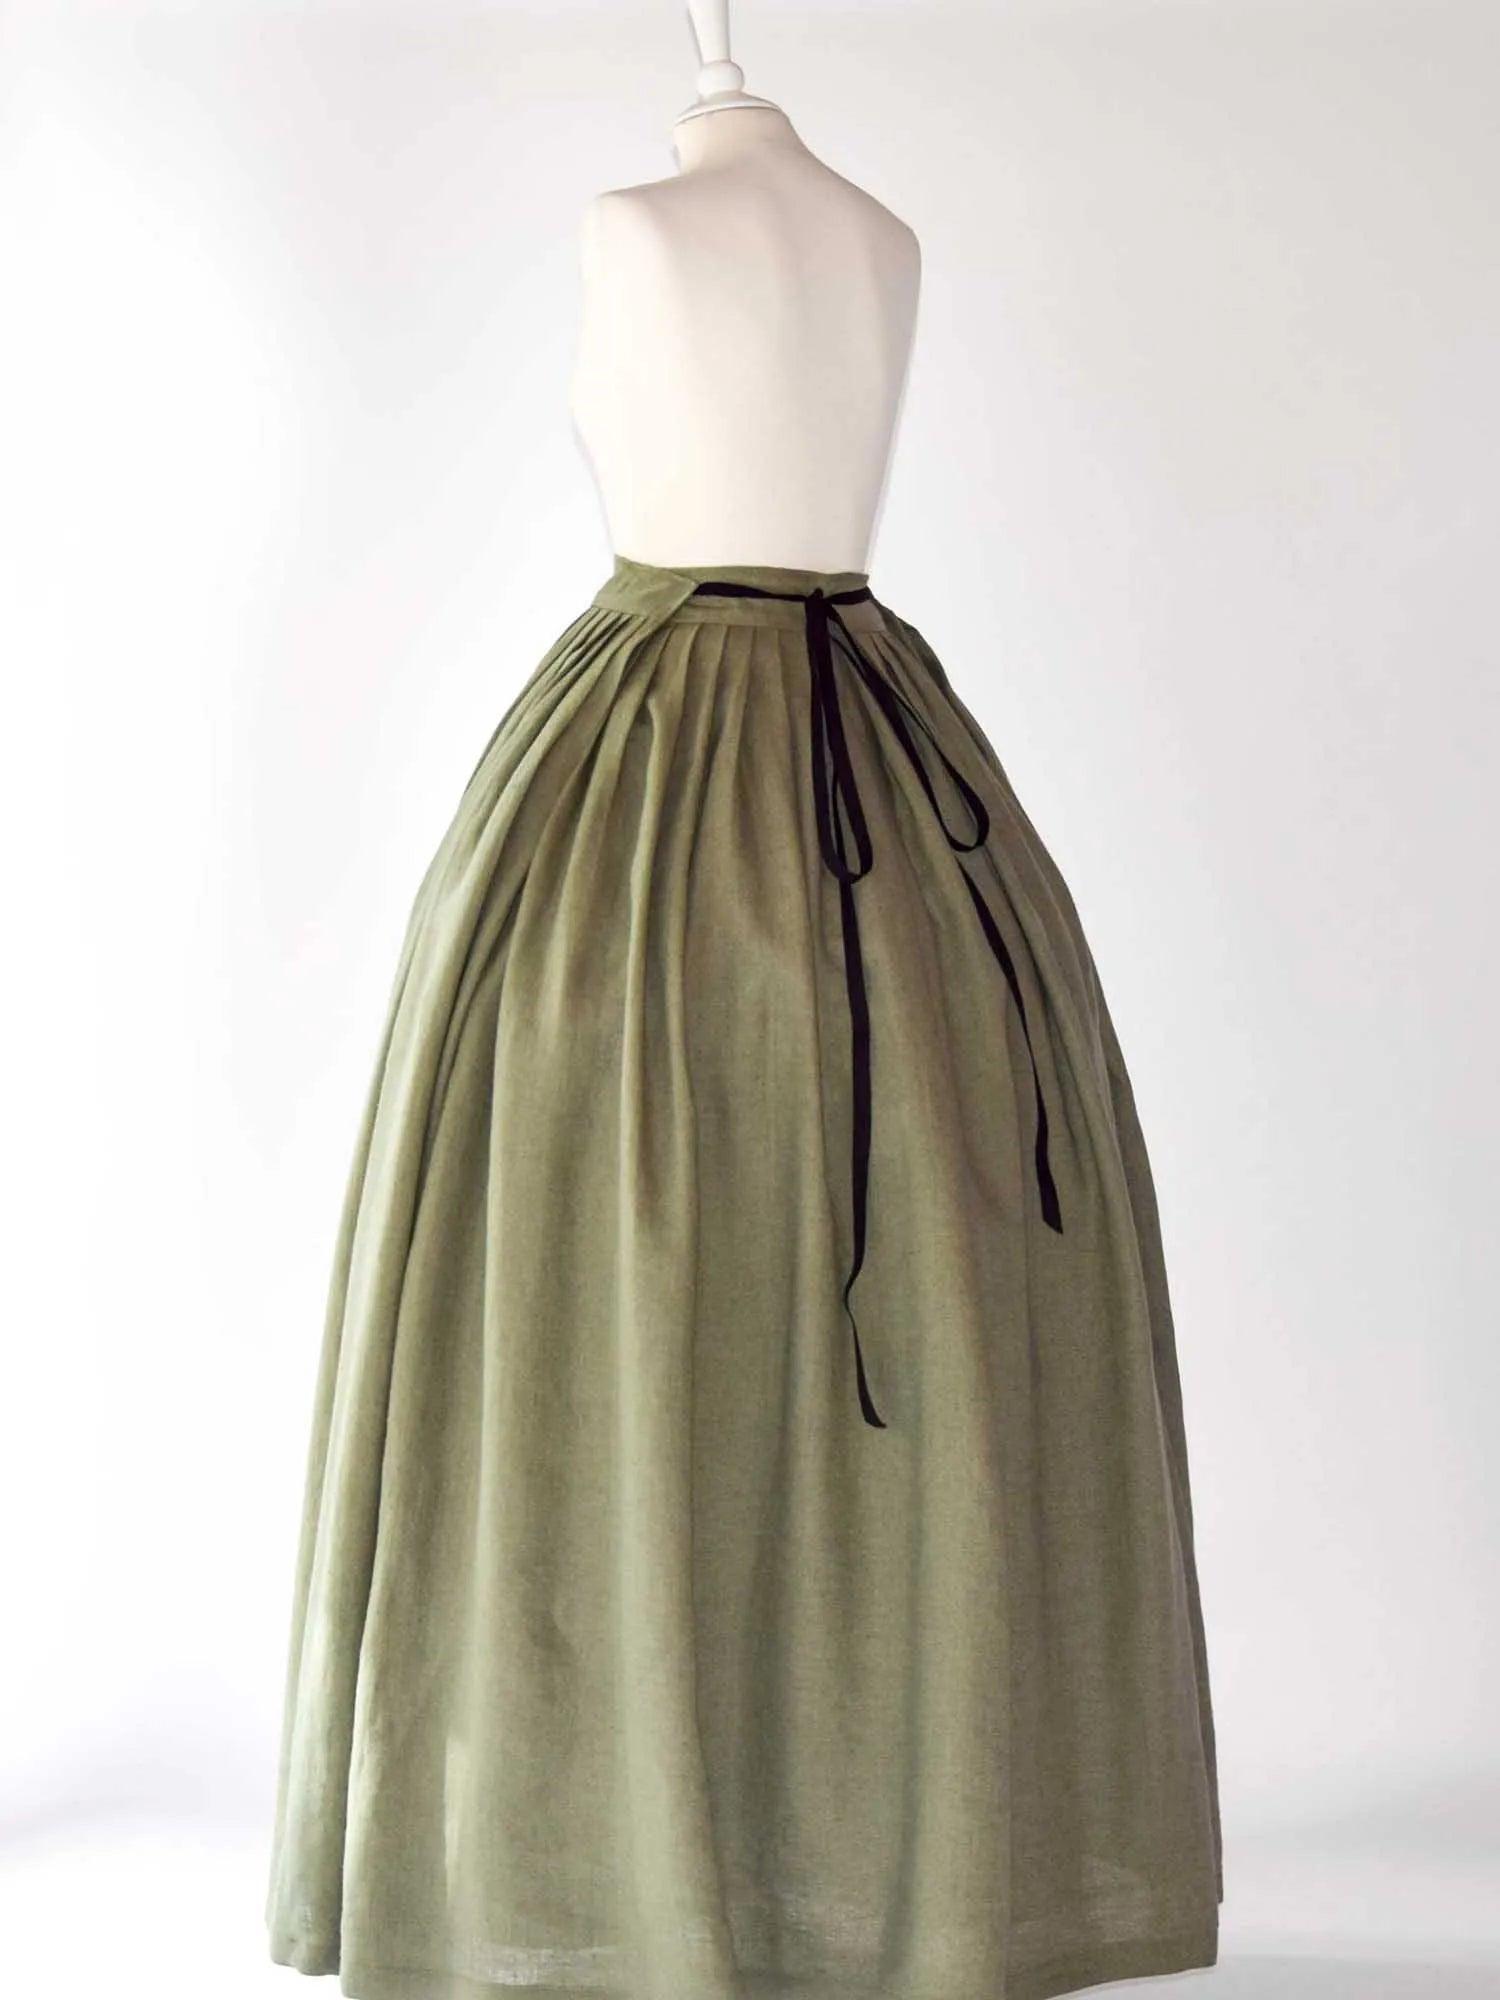 HELOISE, Historical Skirt in Sage Green Linen - Atelier Serraspina